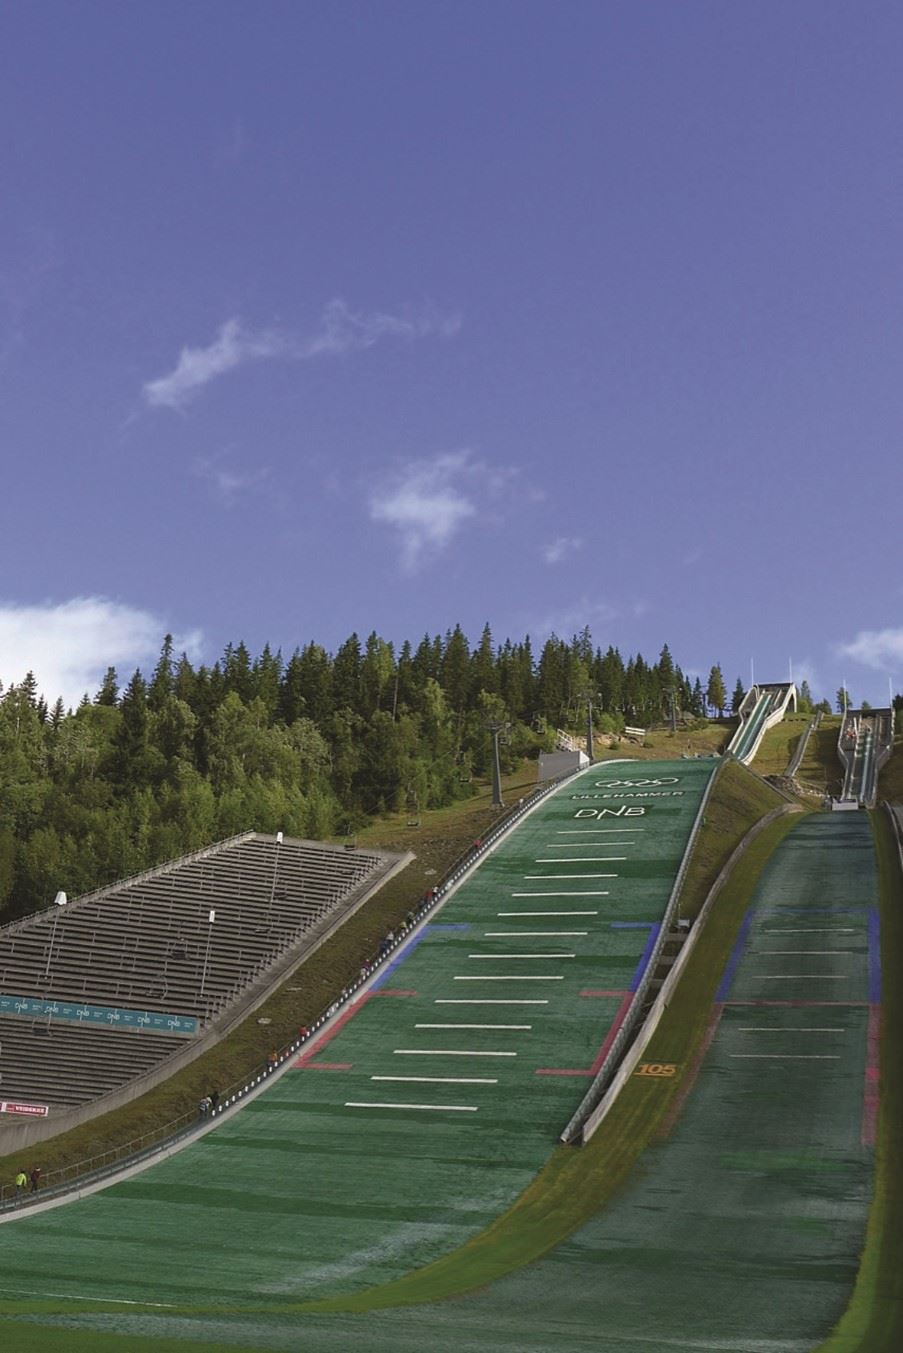 Olympic Ski Jumping Hill, Lillehammer